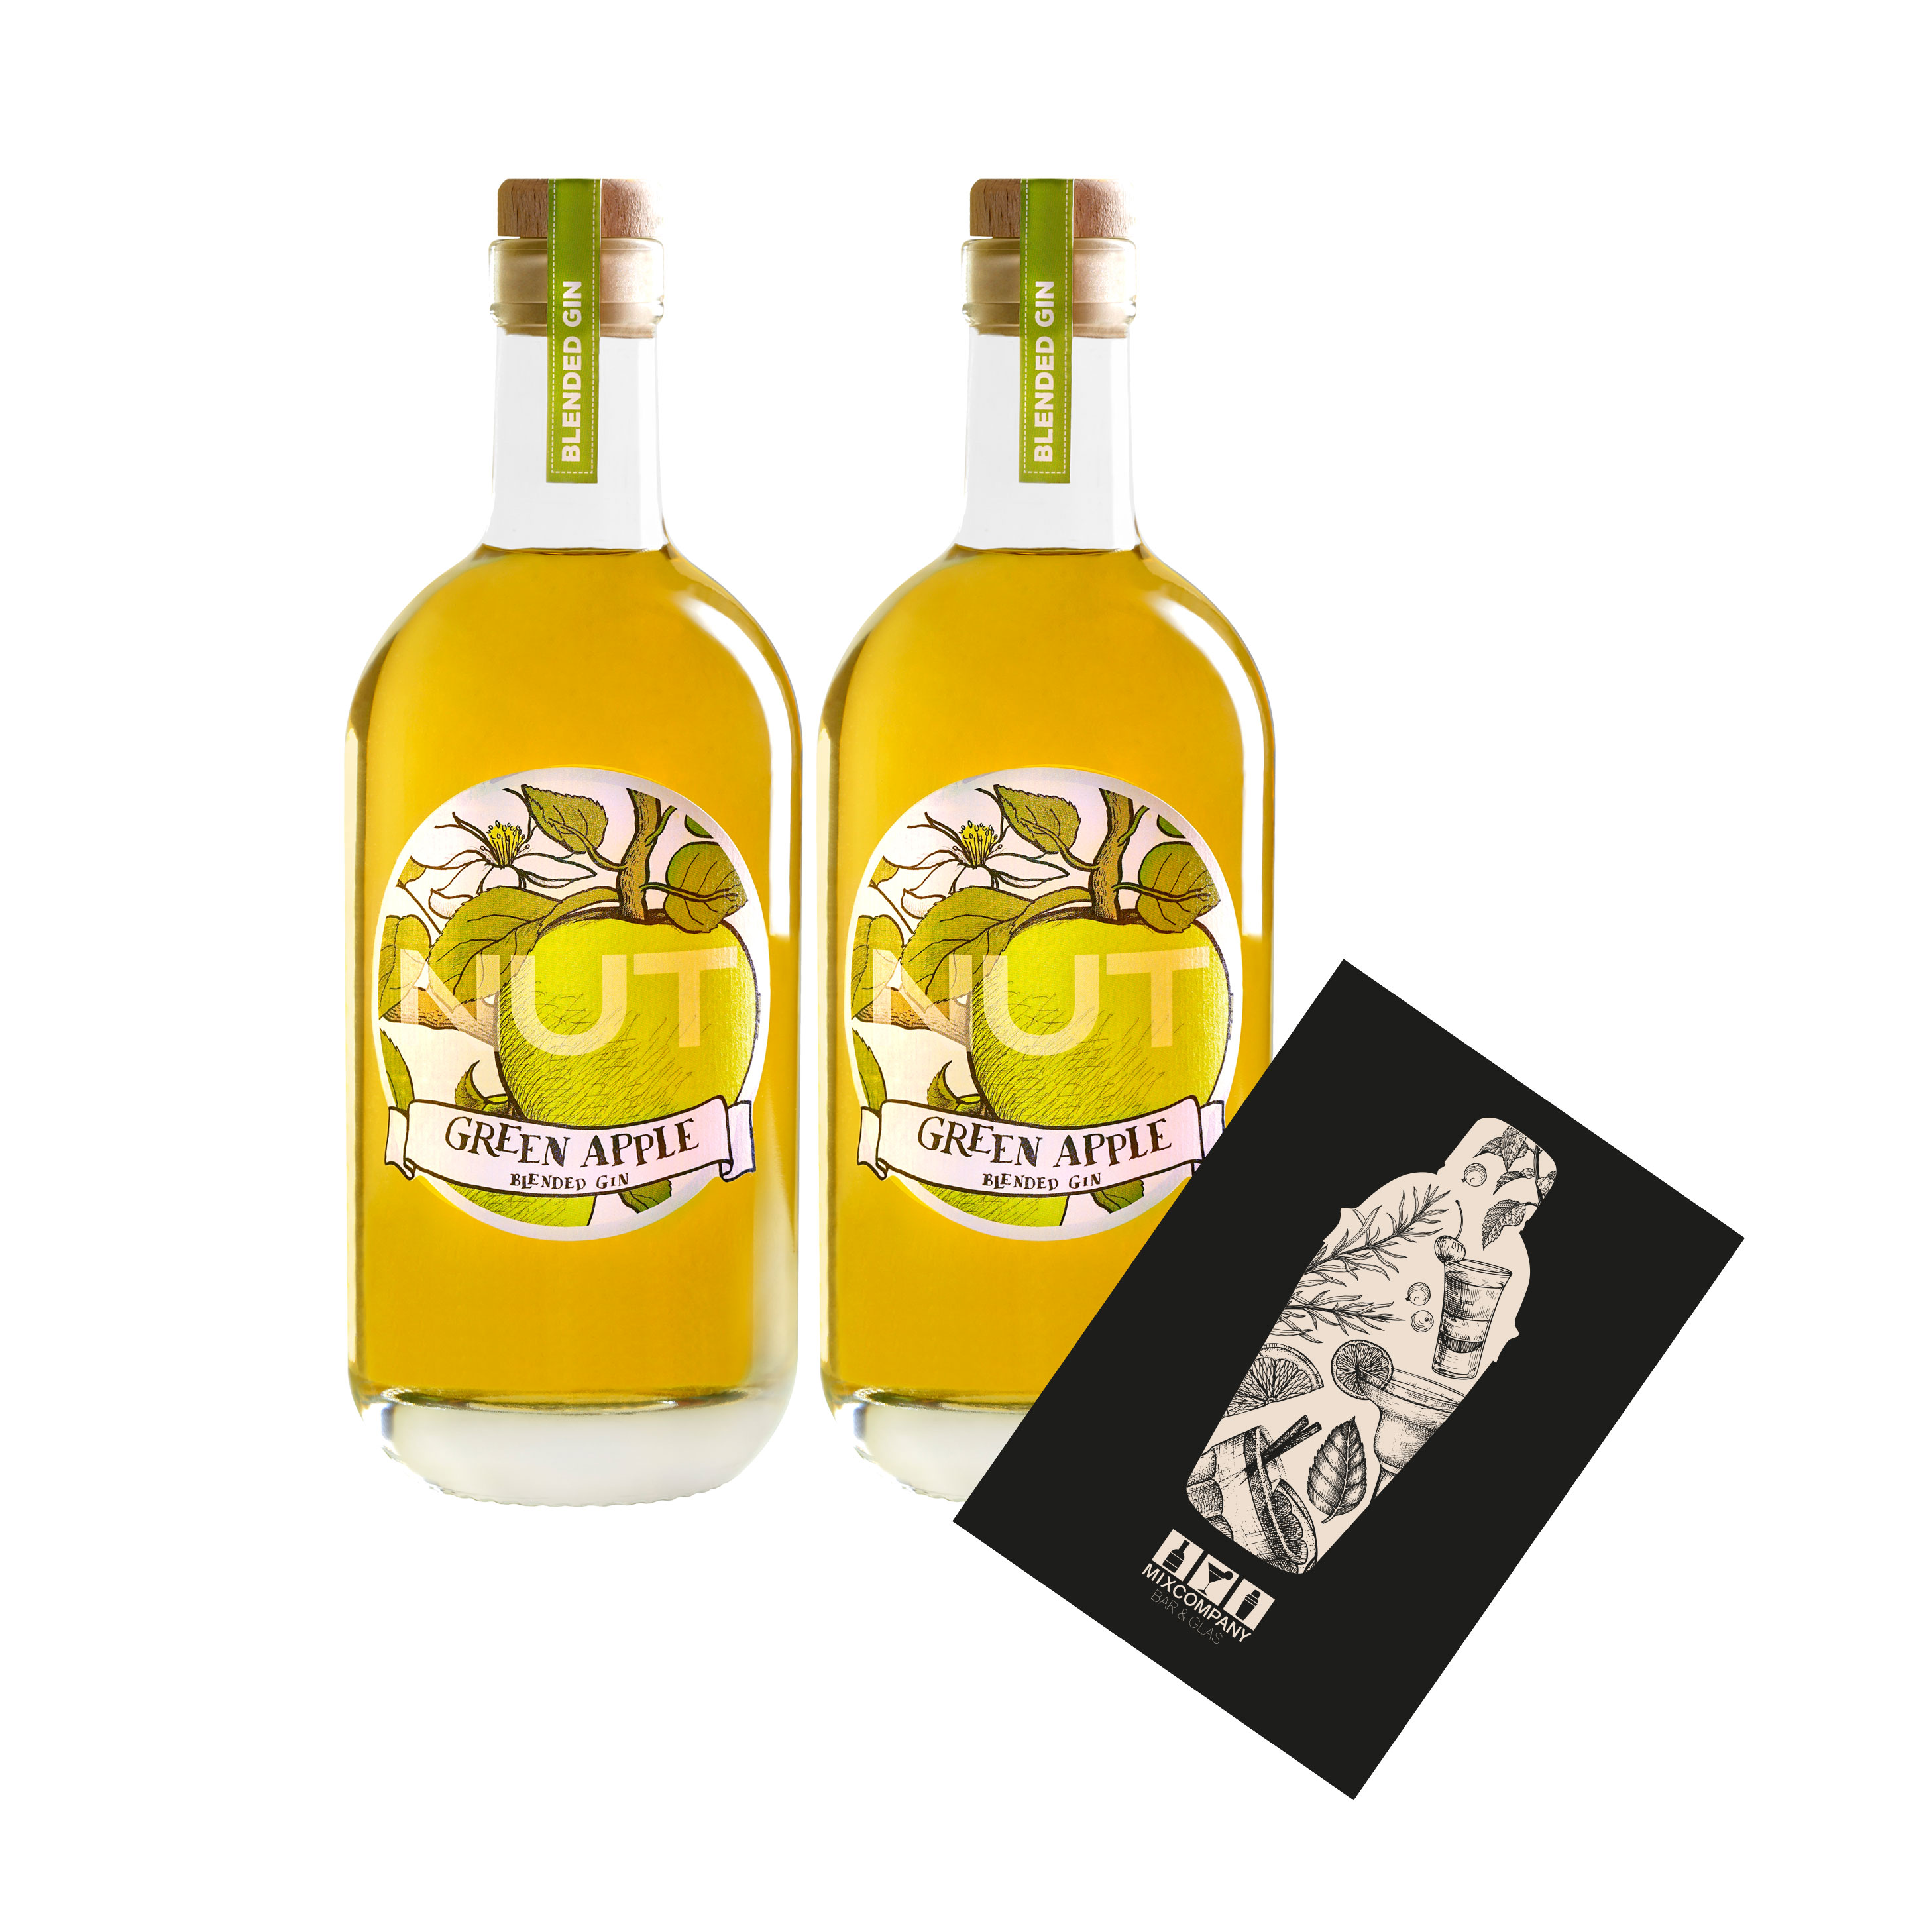 NUT 2er Set Blended Gin Green Apple 2x 0,7L (40% Vol) Grüner Apfel Gin NUT Distillery- [Enthält Sulfite]